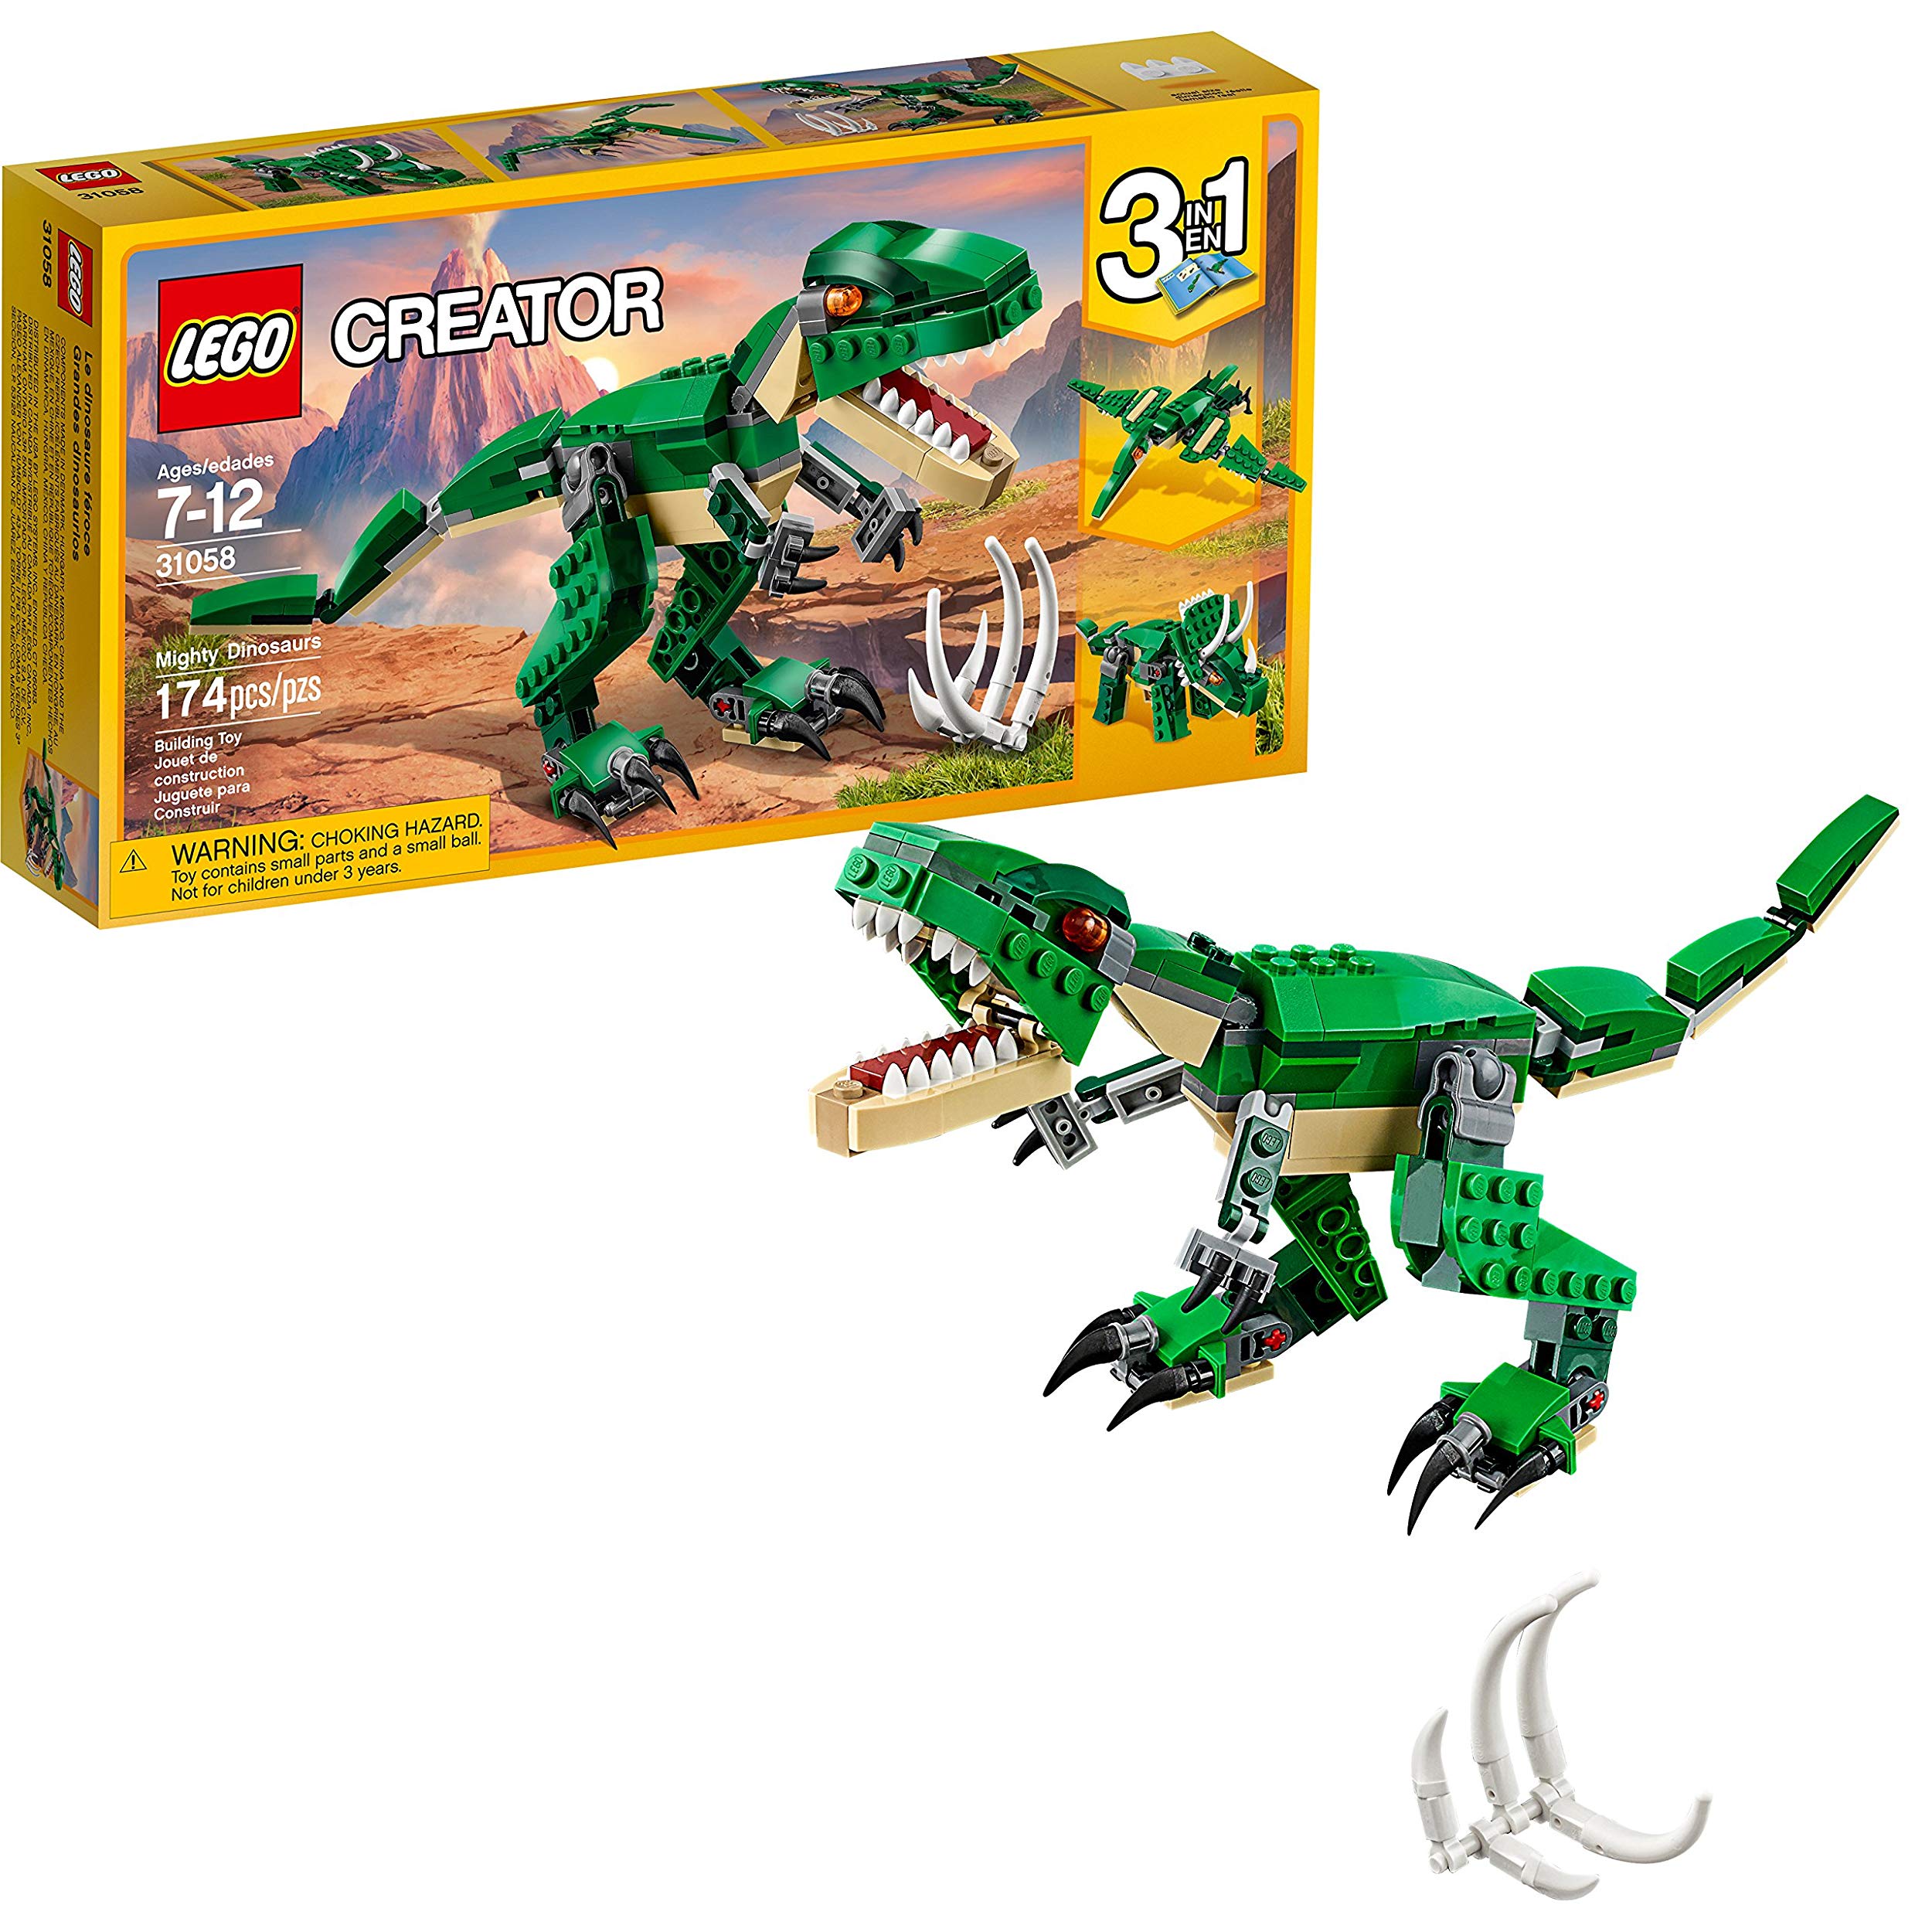 Lego Mighty Dinosaur